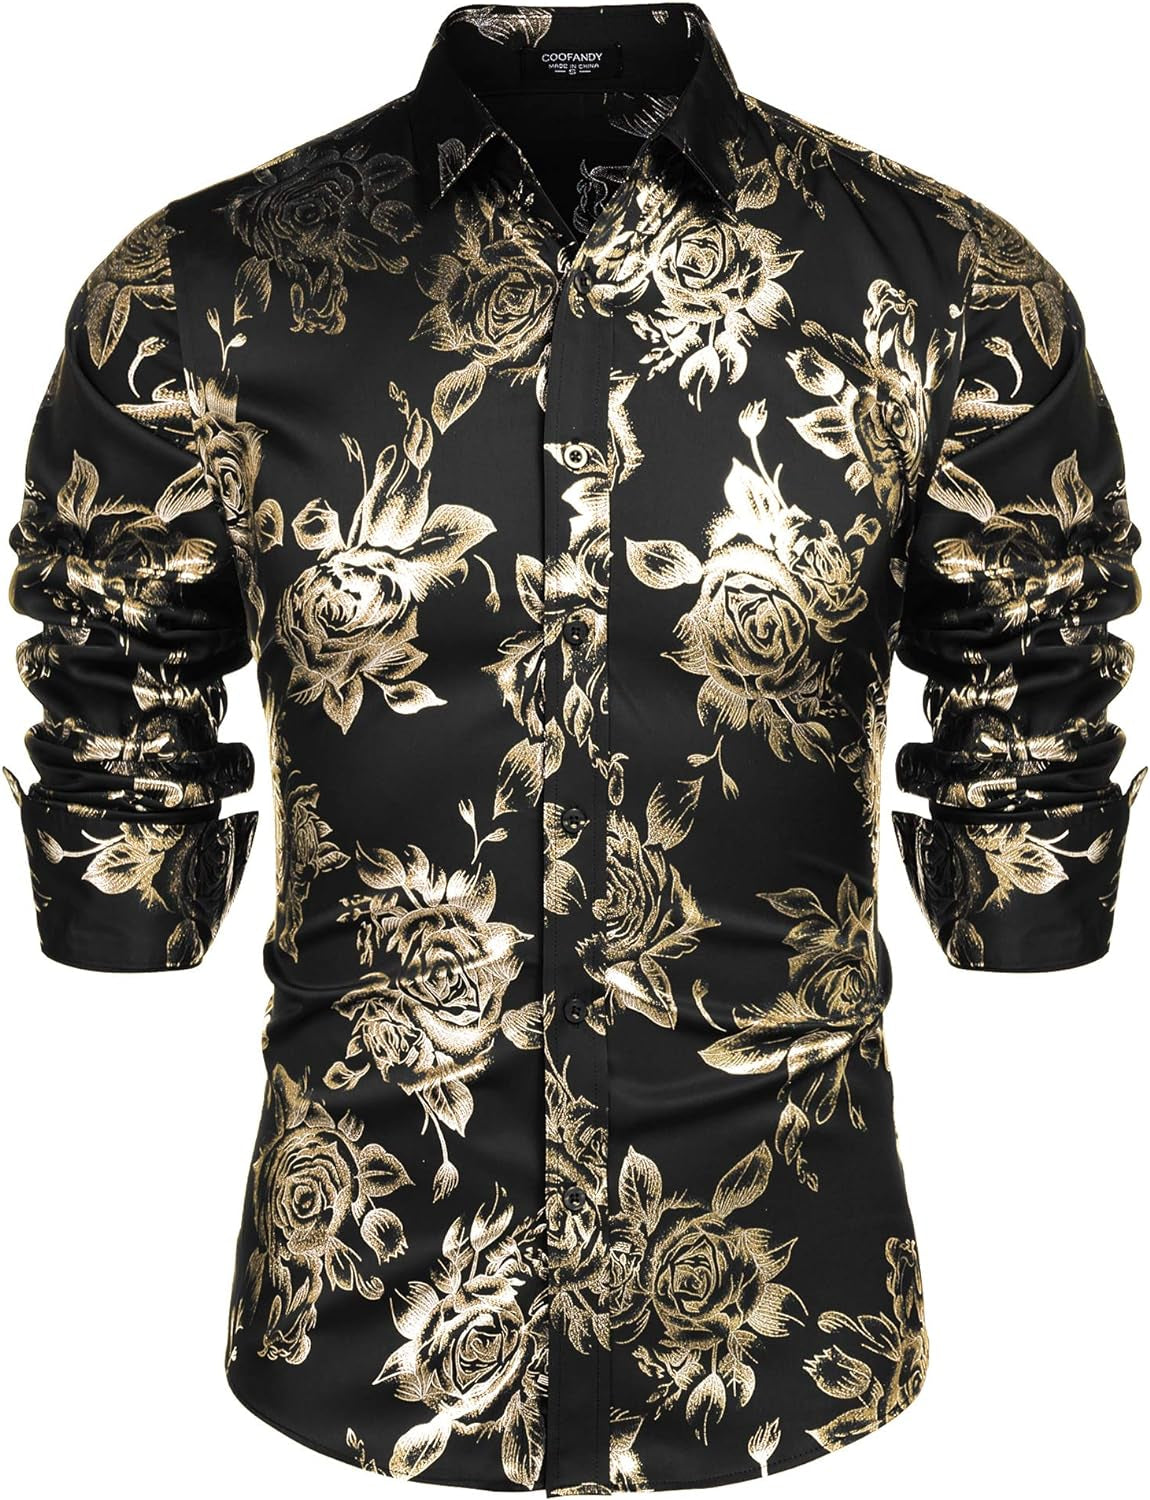 Men's Rose Shiny Shirt Luxury Flowered Printed Button down Shirt